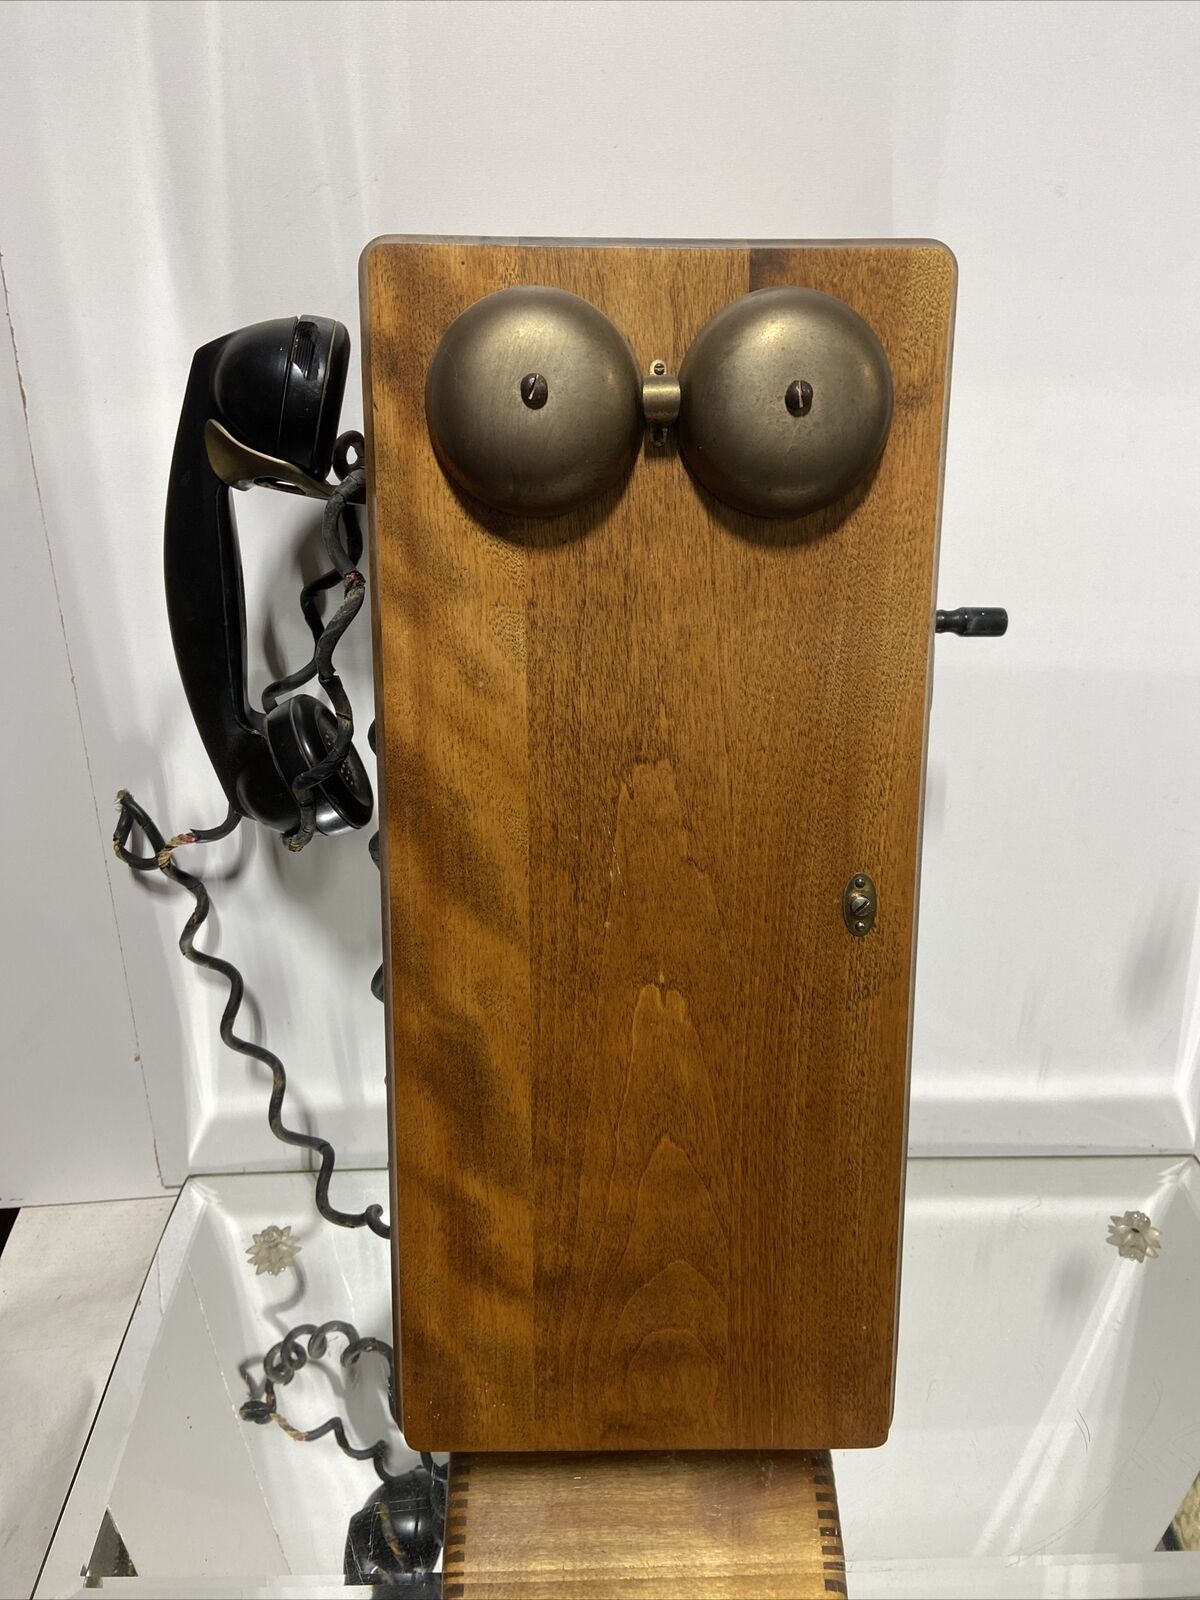 VTG. Antique c1900 Oak Crank Wall Telephone